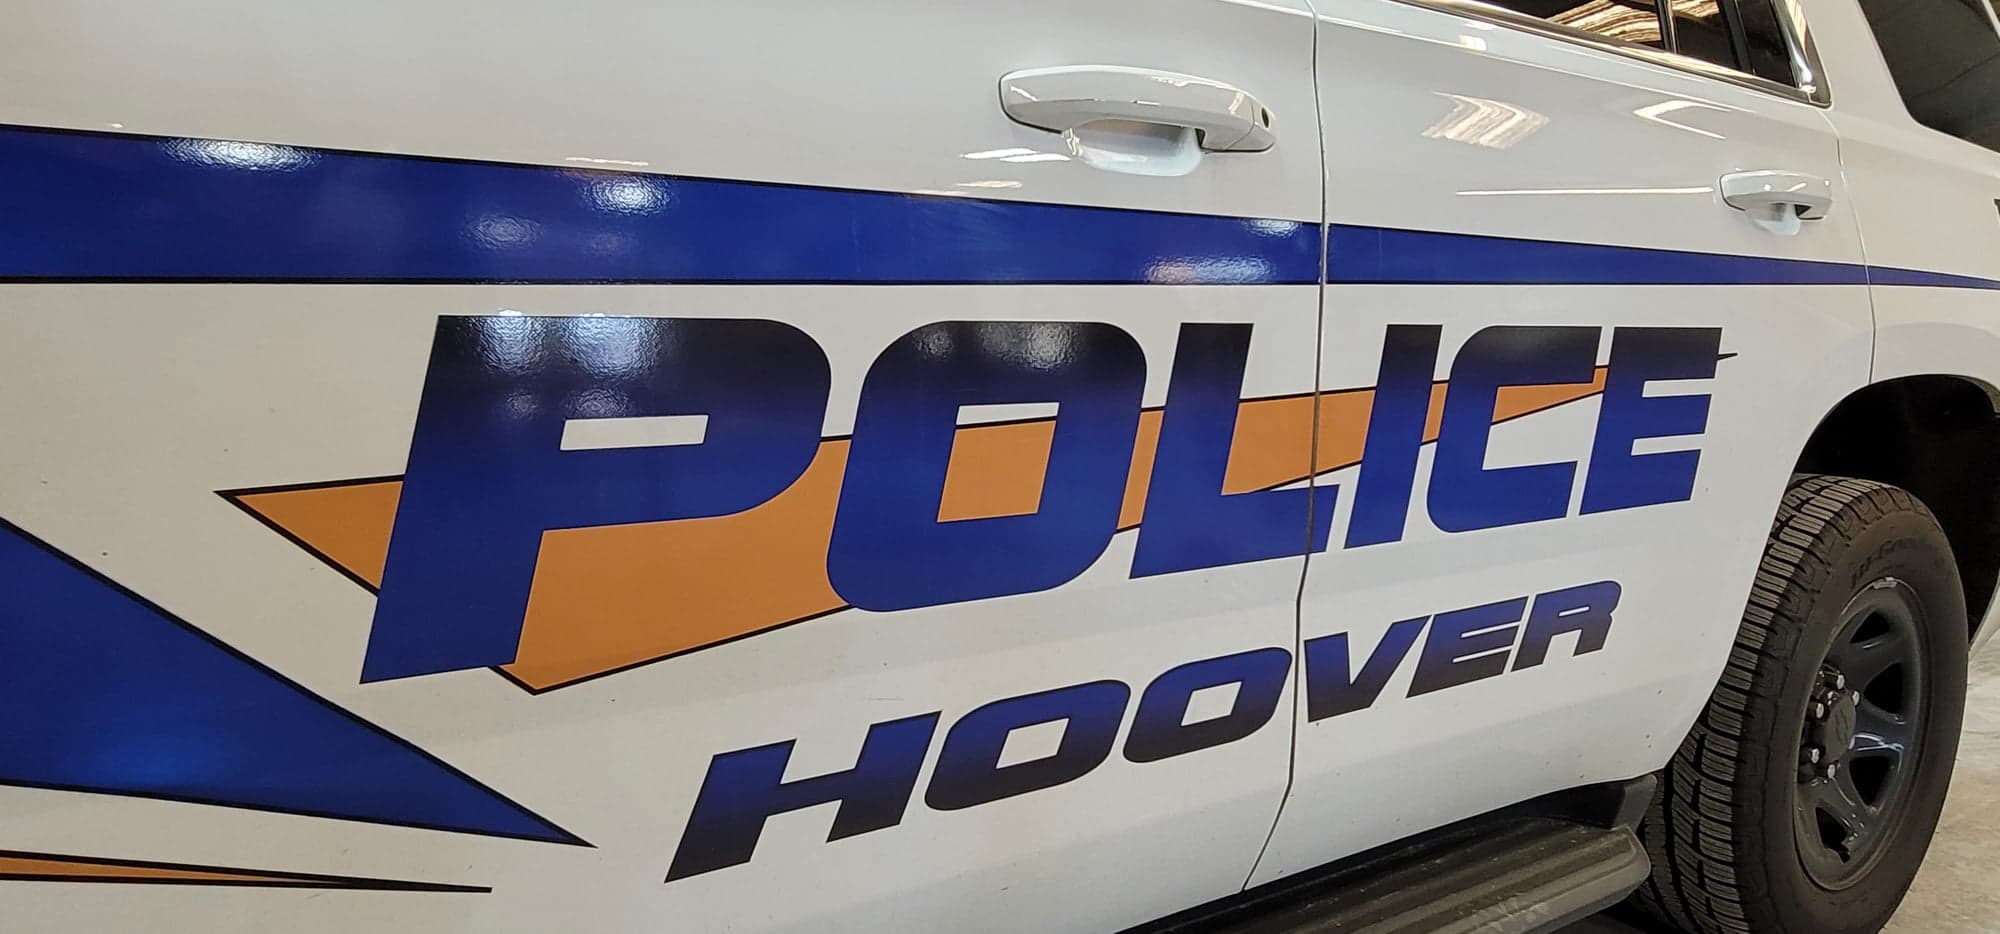 Coroner identifies 2 killed in possible murder-suicide in Hoover